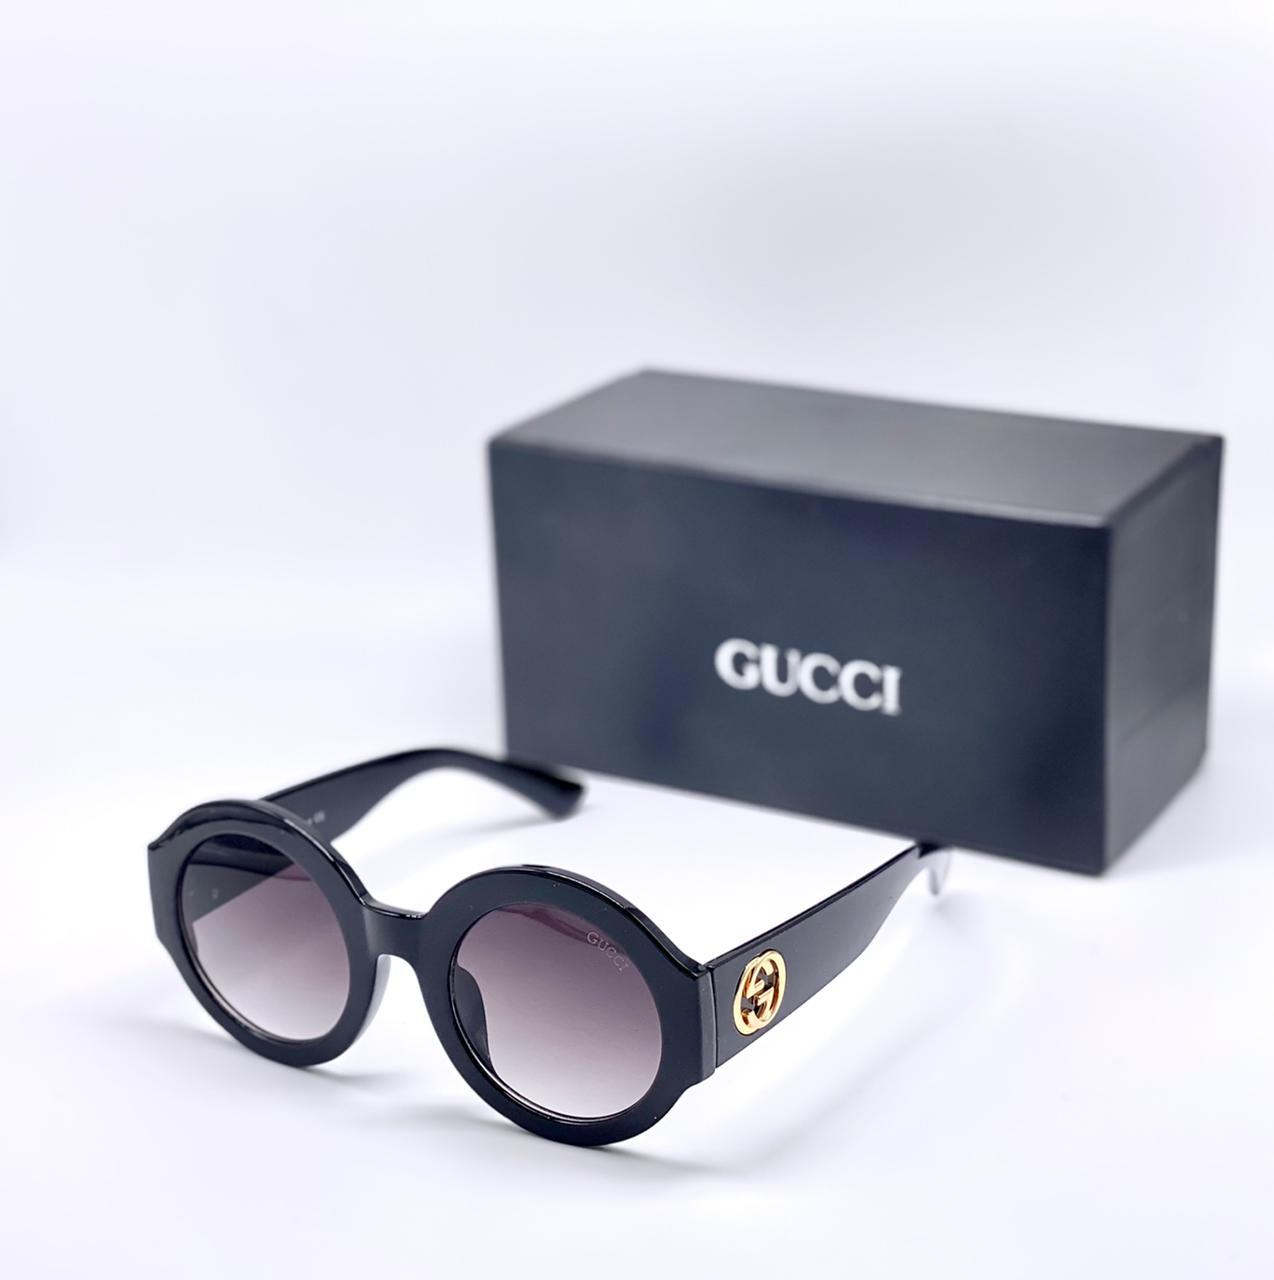 Gucci Branded Black Color Transparent Shade Glass Black Frame Urban Web Block Diva Flat Men's Women's Sunglass For Men's Woman Or Girl Gg-0797-S 001 Oversized Sunglasses